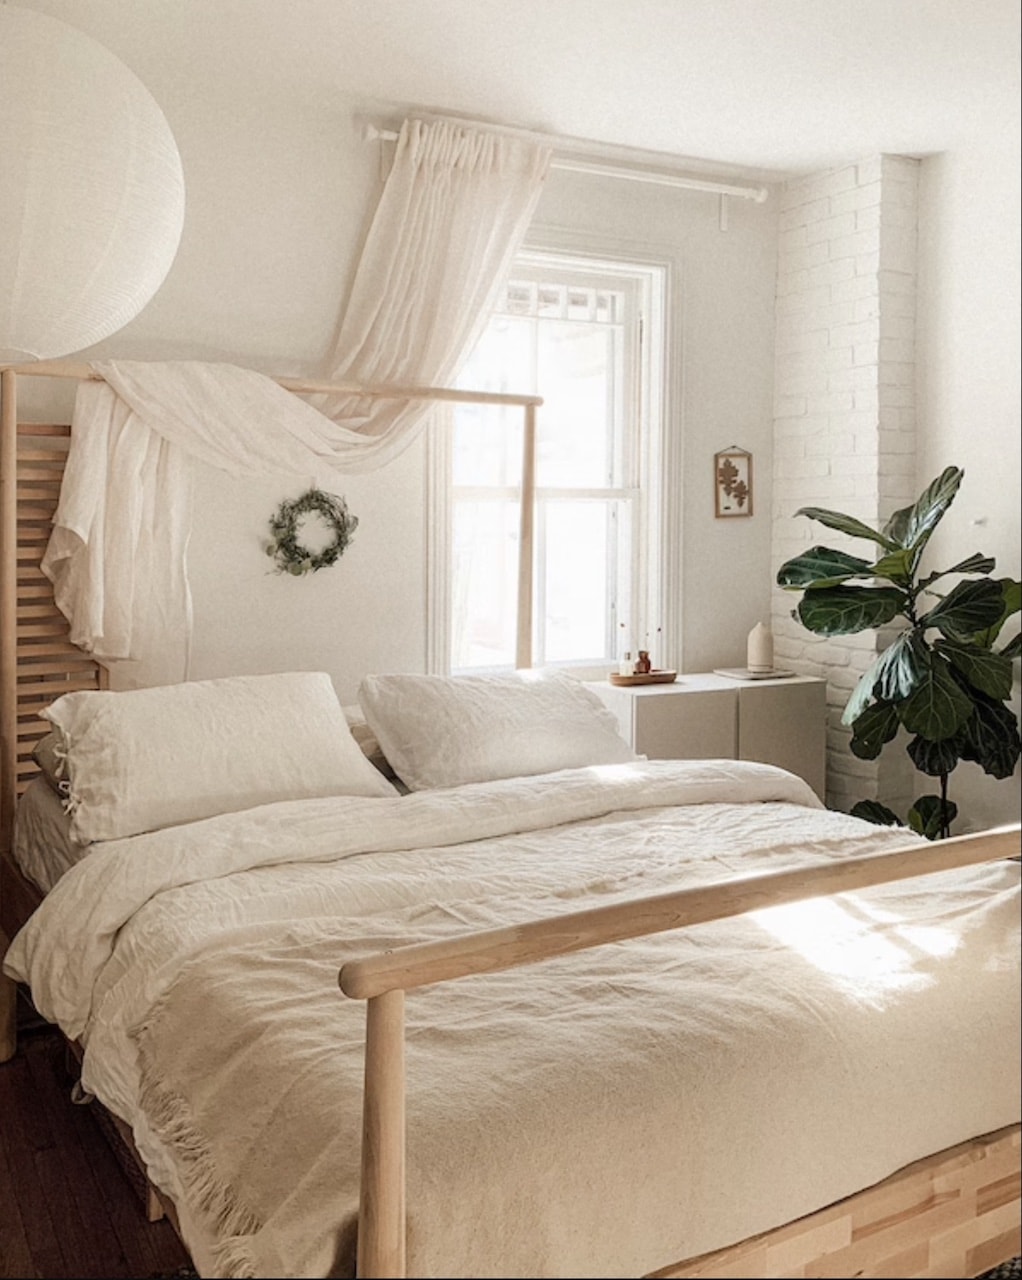 japandi design style bedroom linens natural light